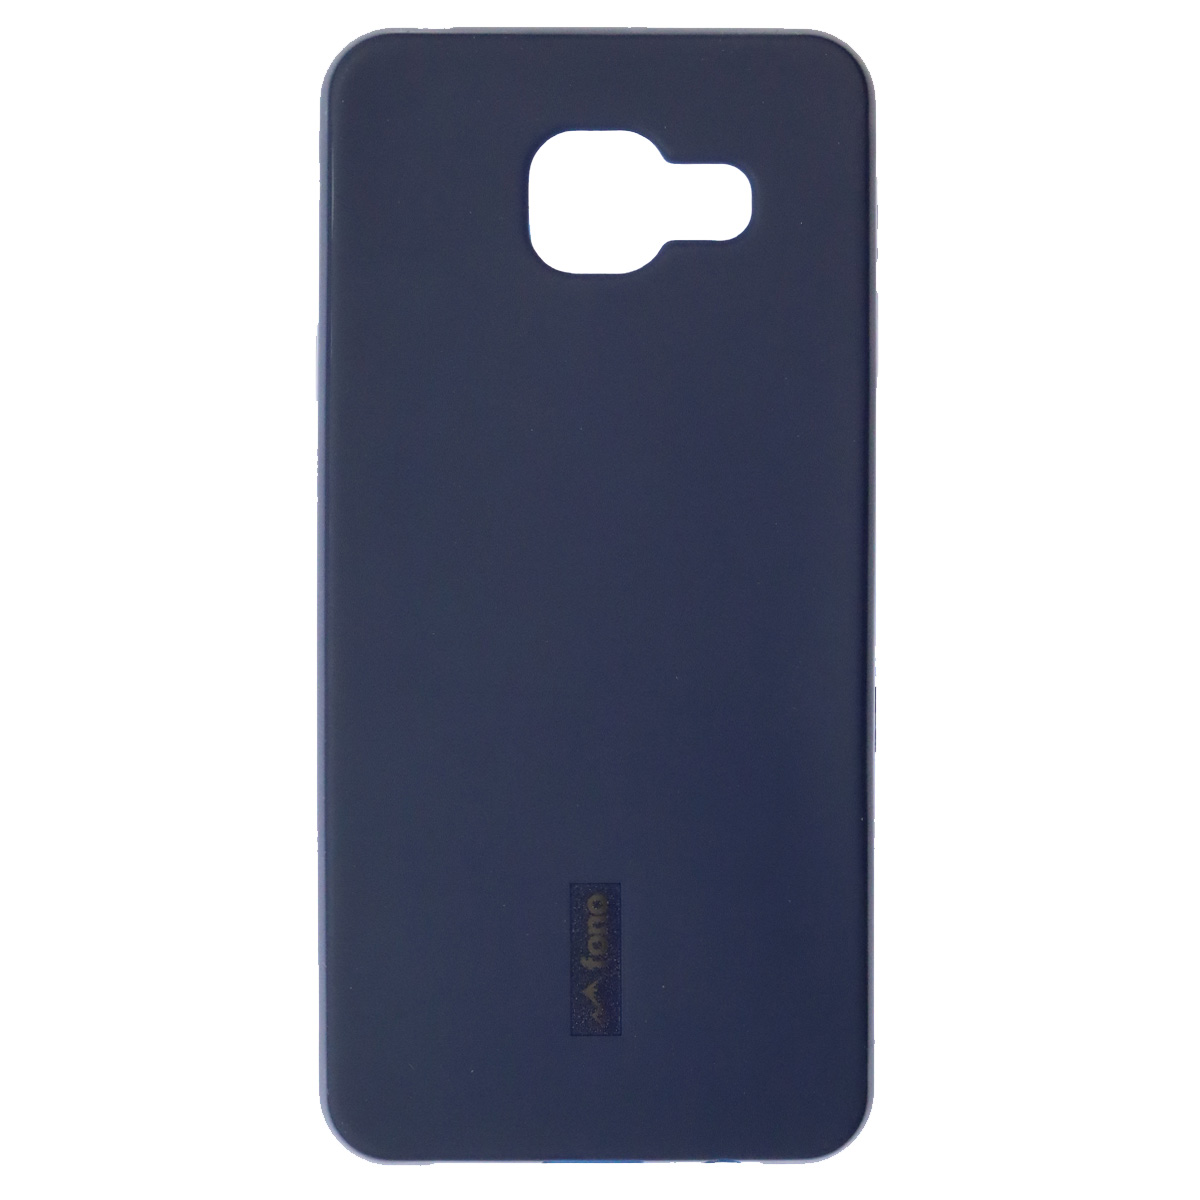 Чехол накладка для SAMSUNG Galaxy A3 2016 (SM-A310), силикон, цвет синий